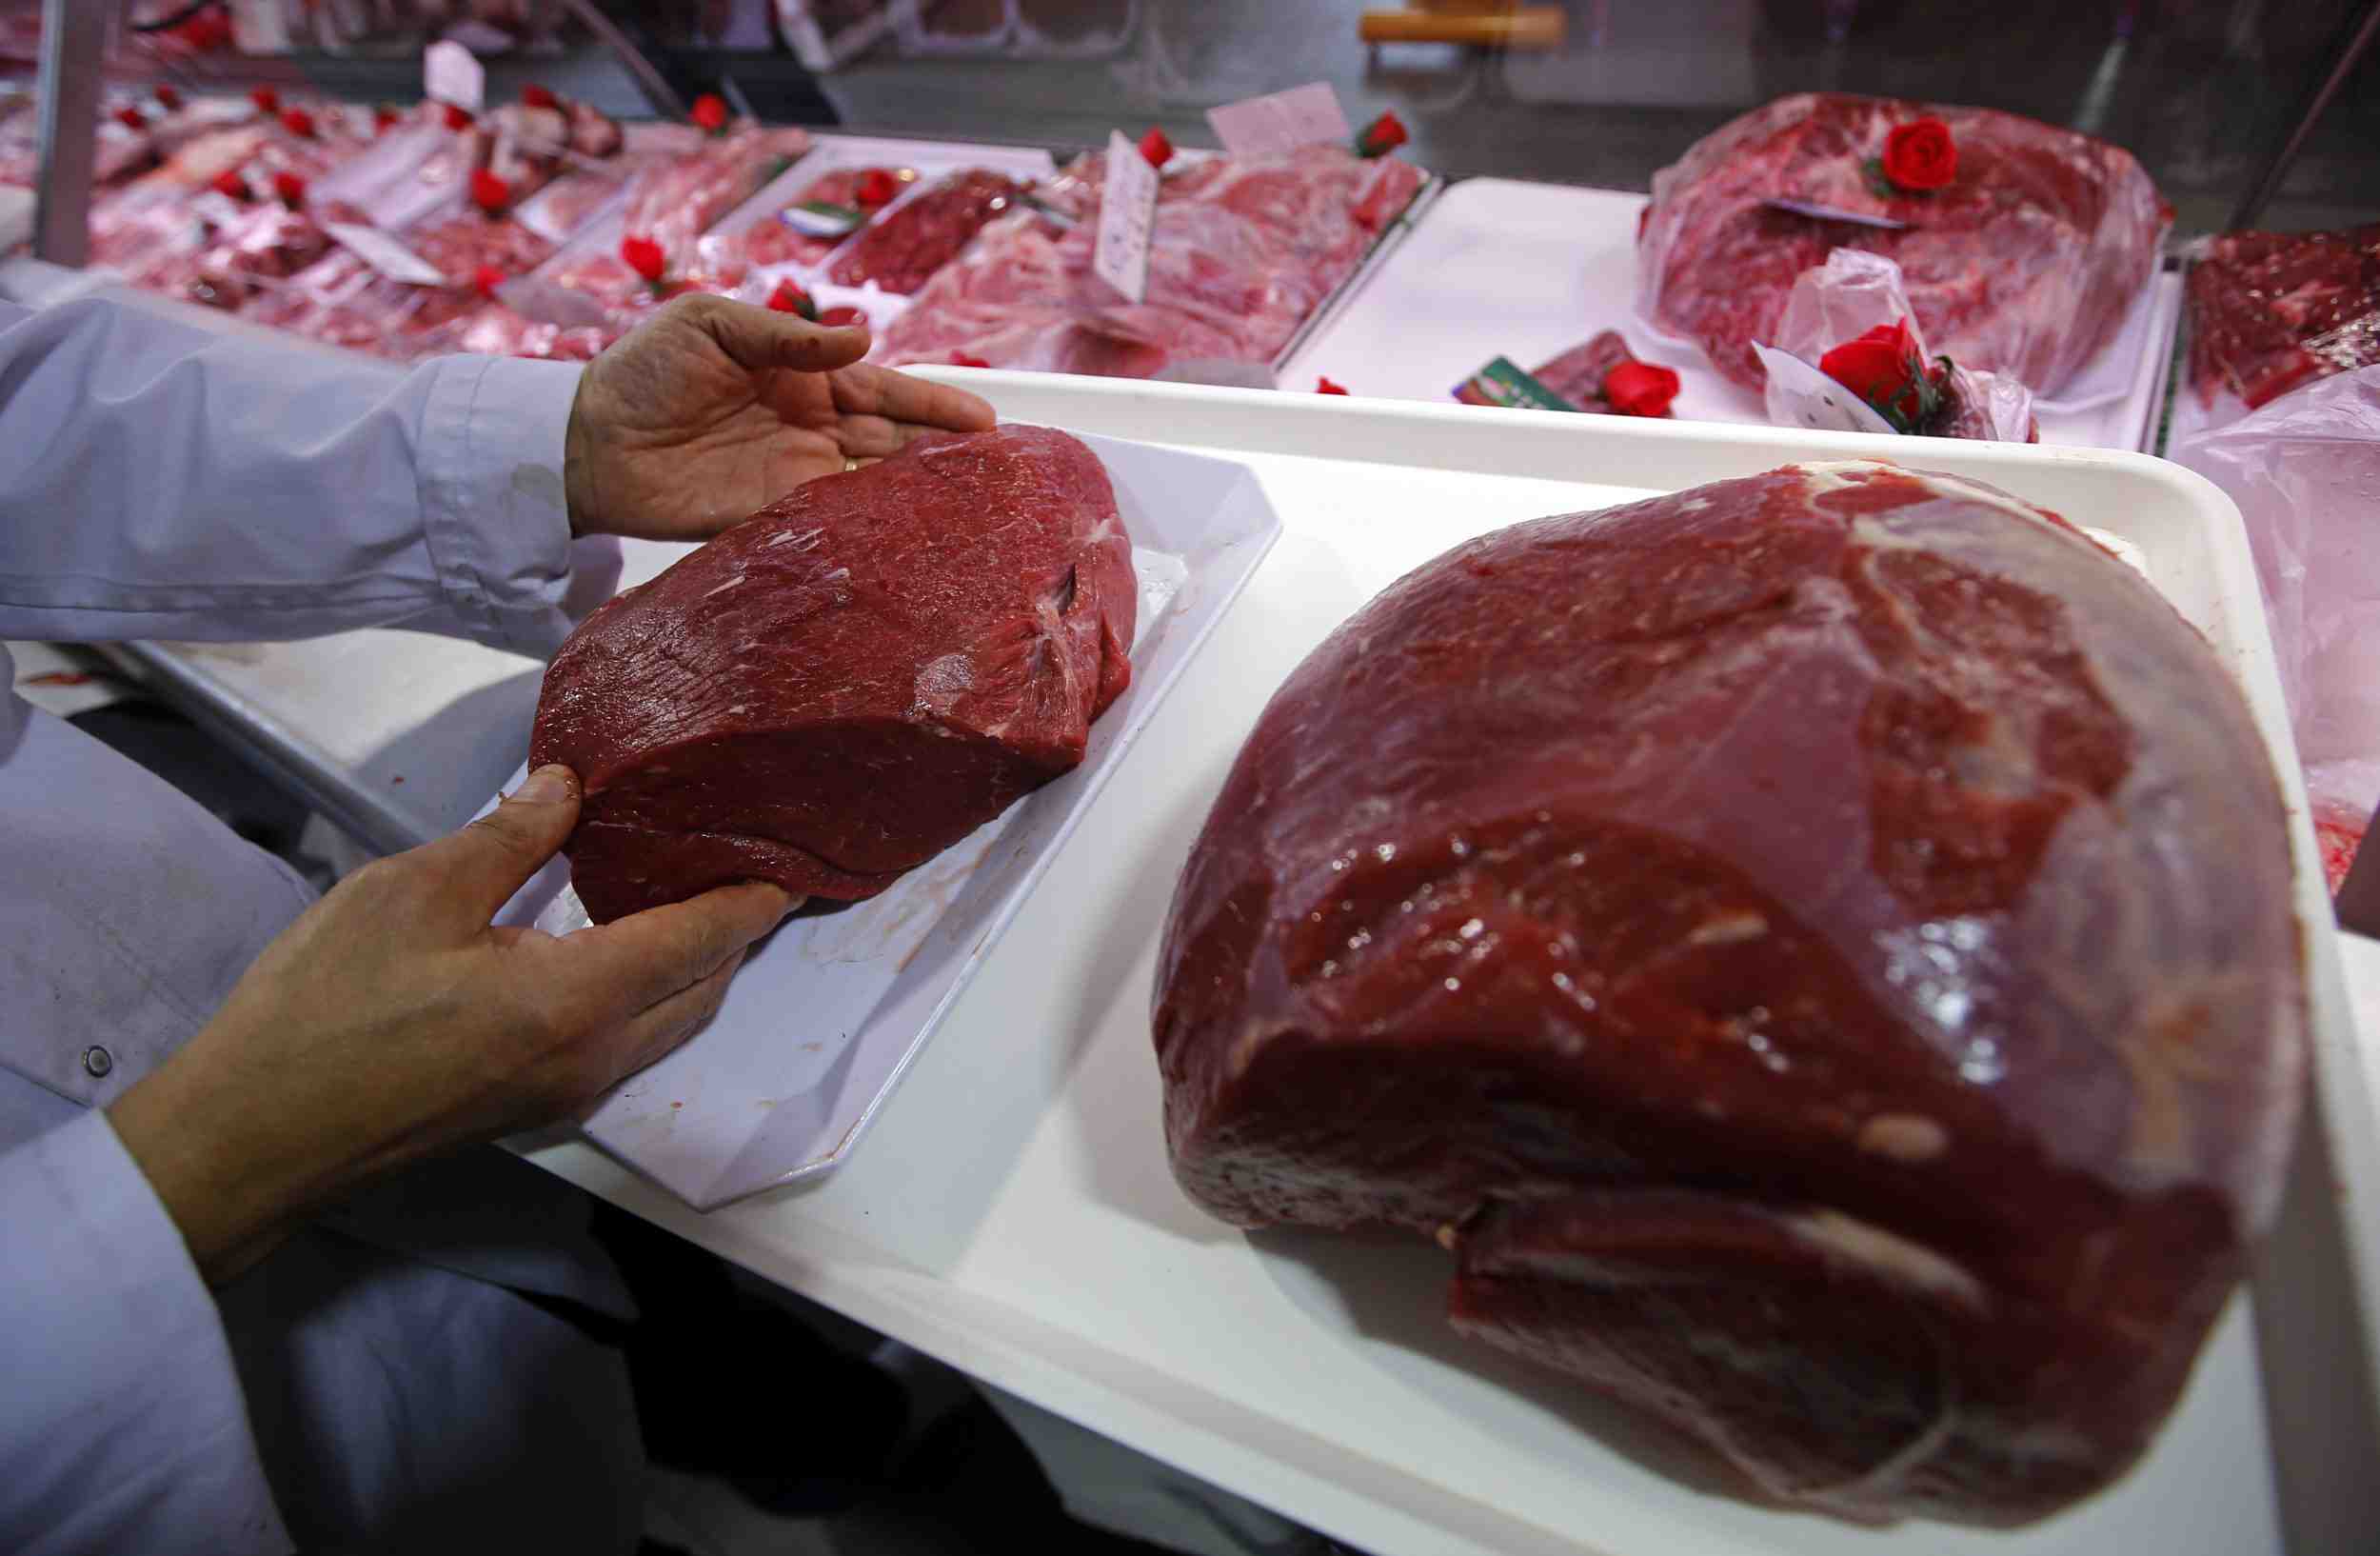 What temperature kills bacteria in meat?